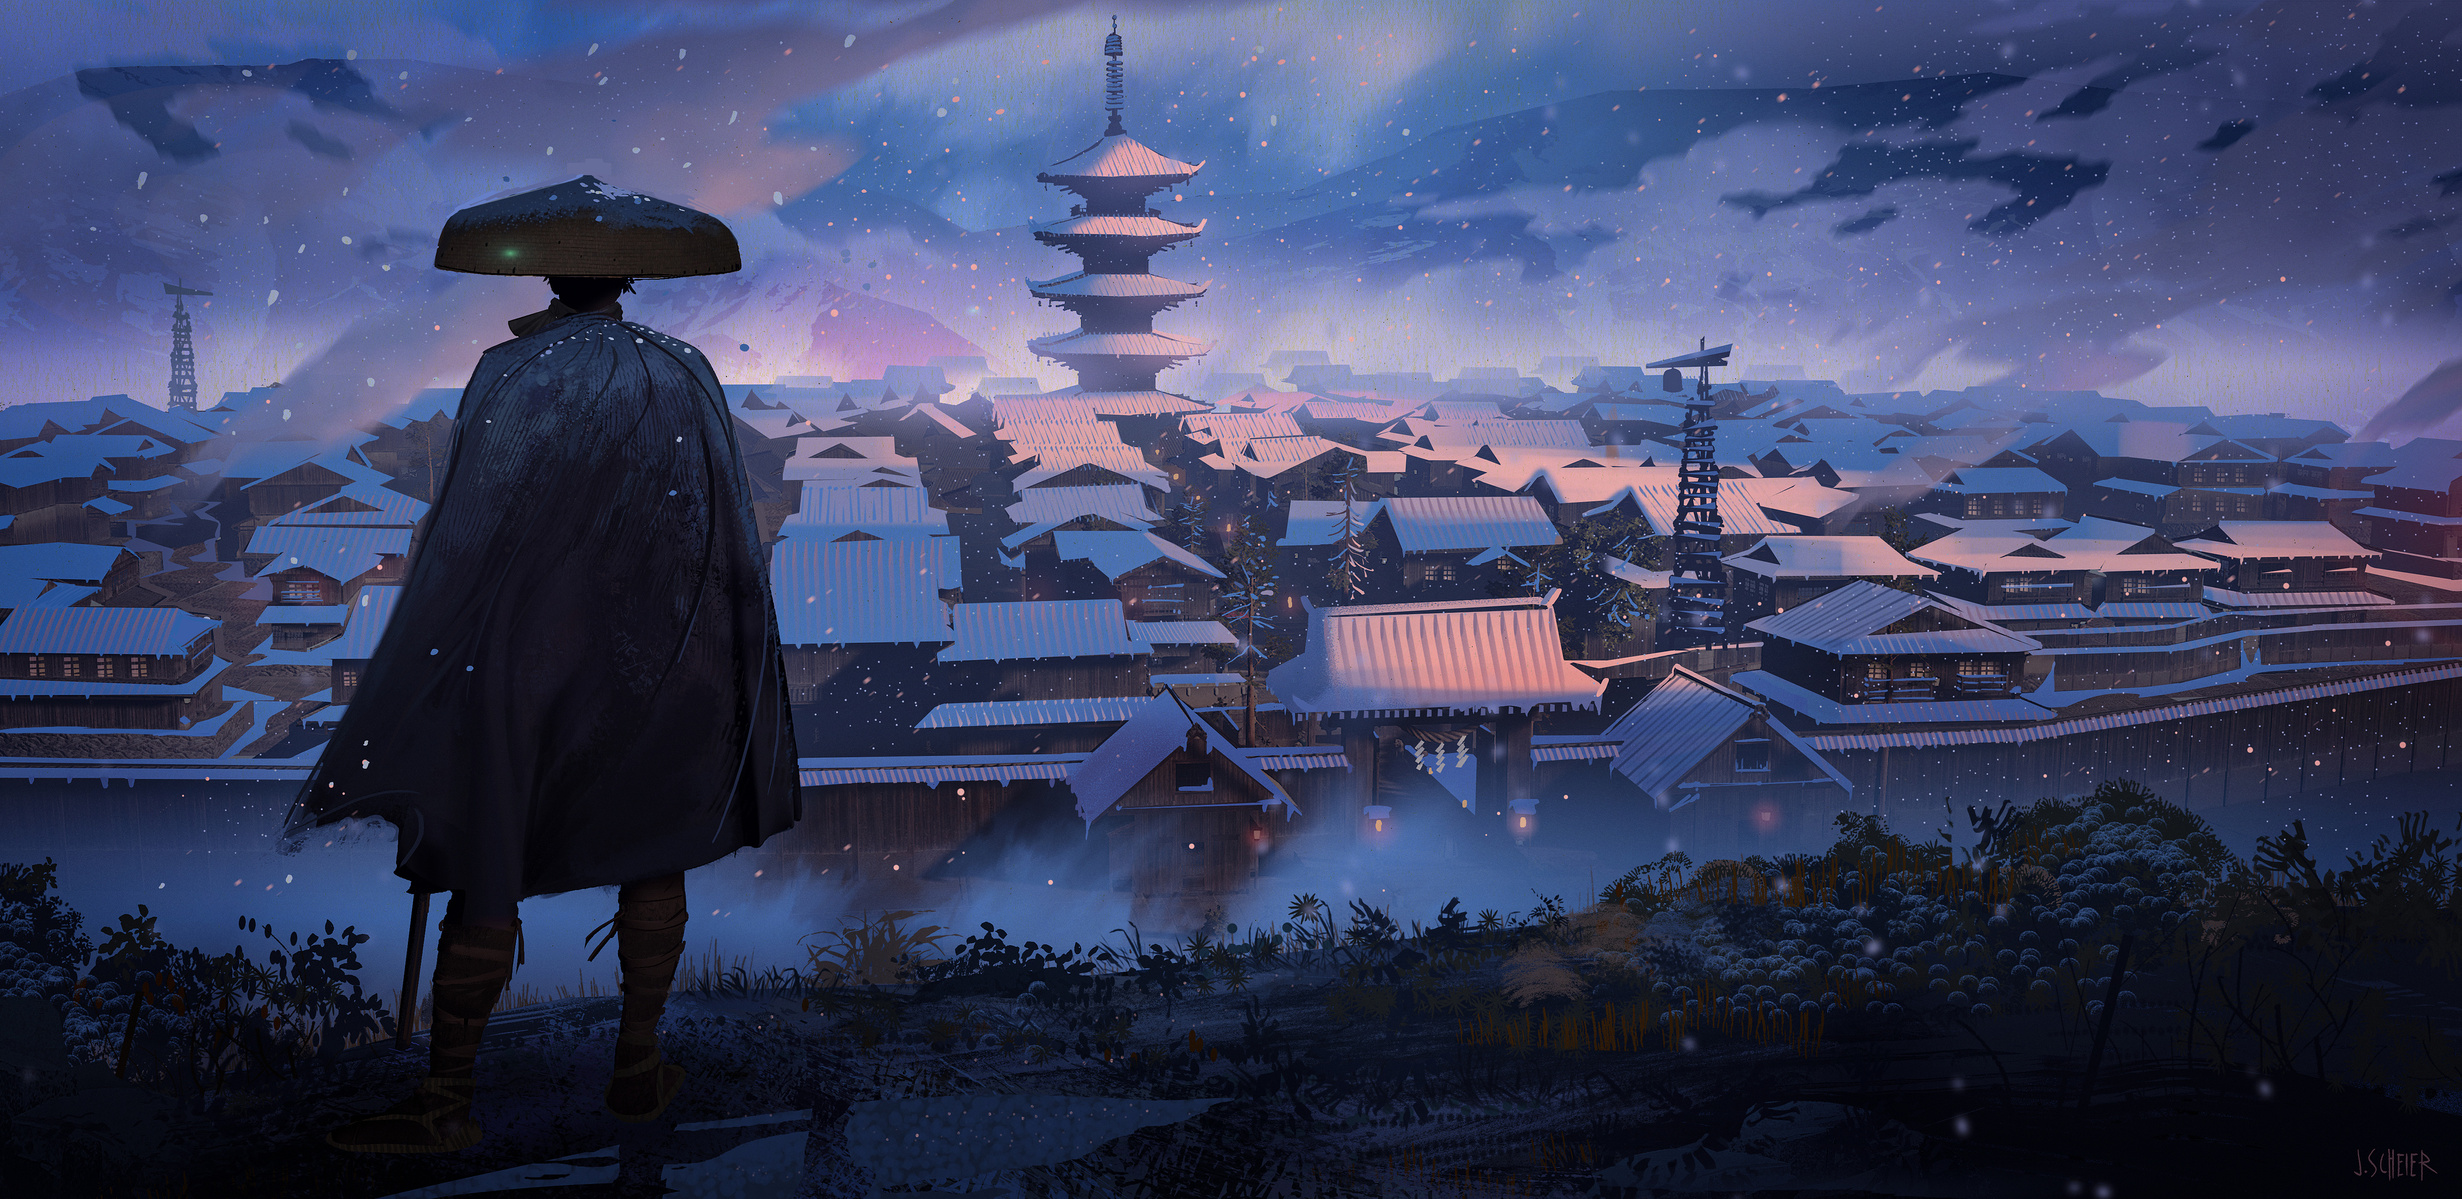 Jason Scheier Digital Art Artwork Illustration Samurai Town Building Architecture Pagoda Japan Snow  2462x1199